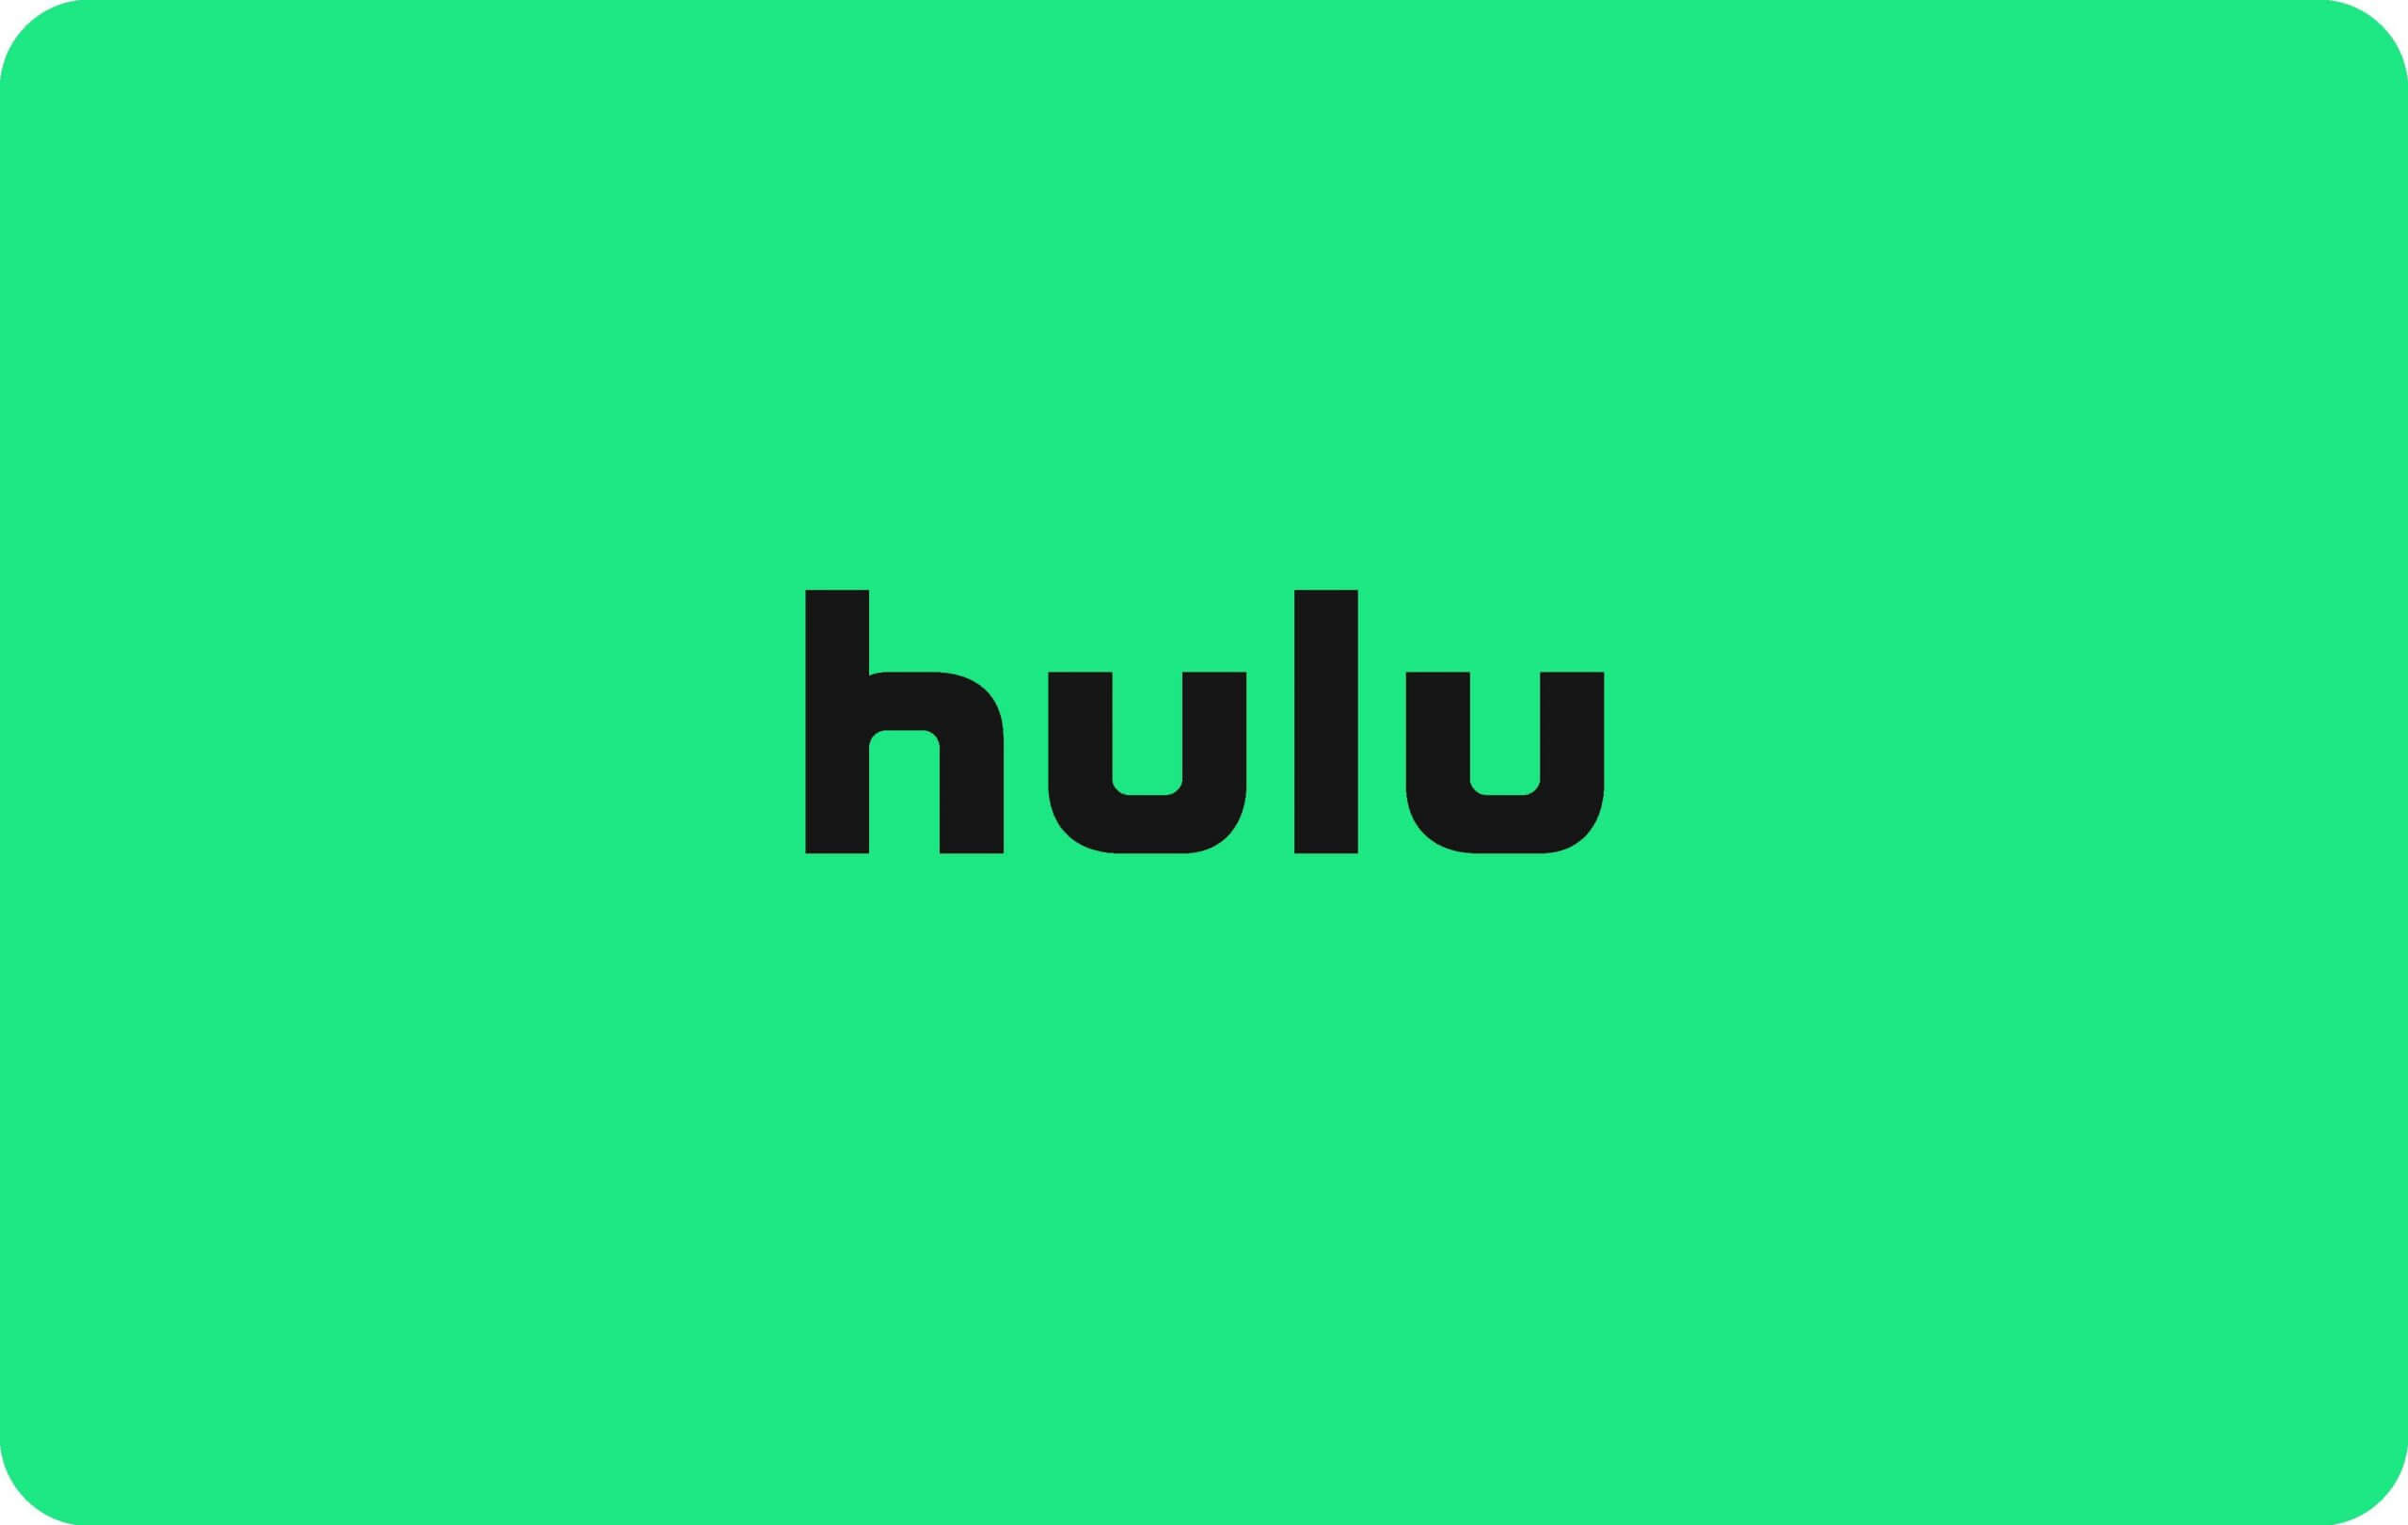 Hulu Mission and Vision Statement Analysis